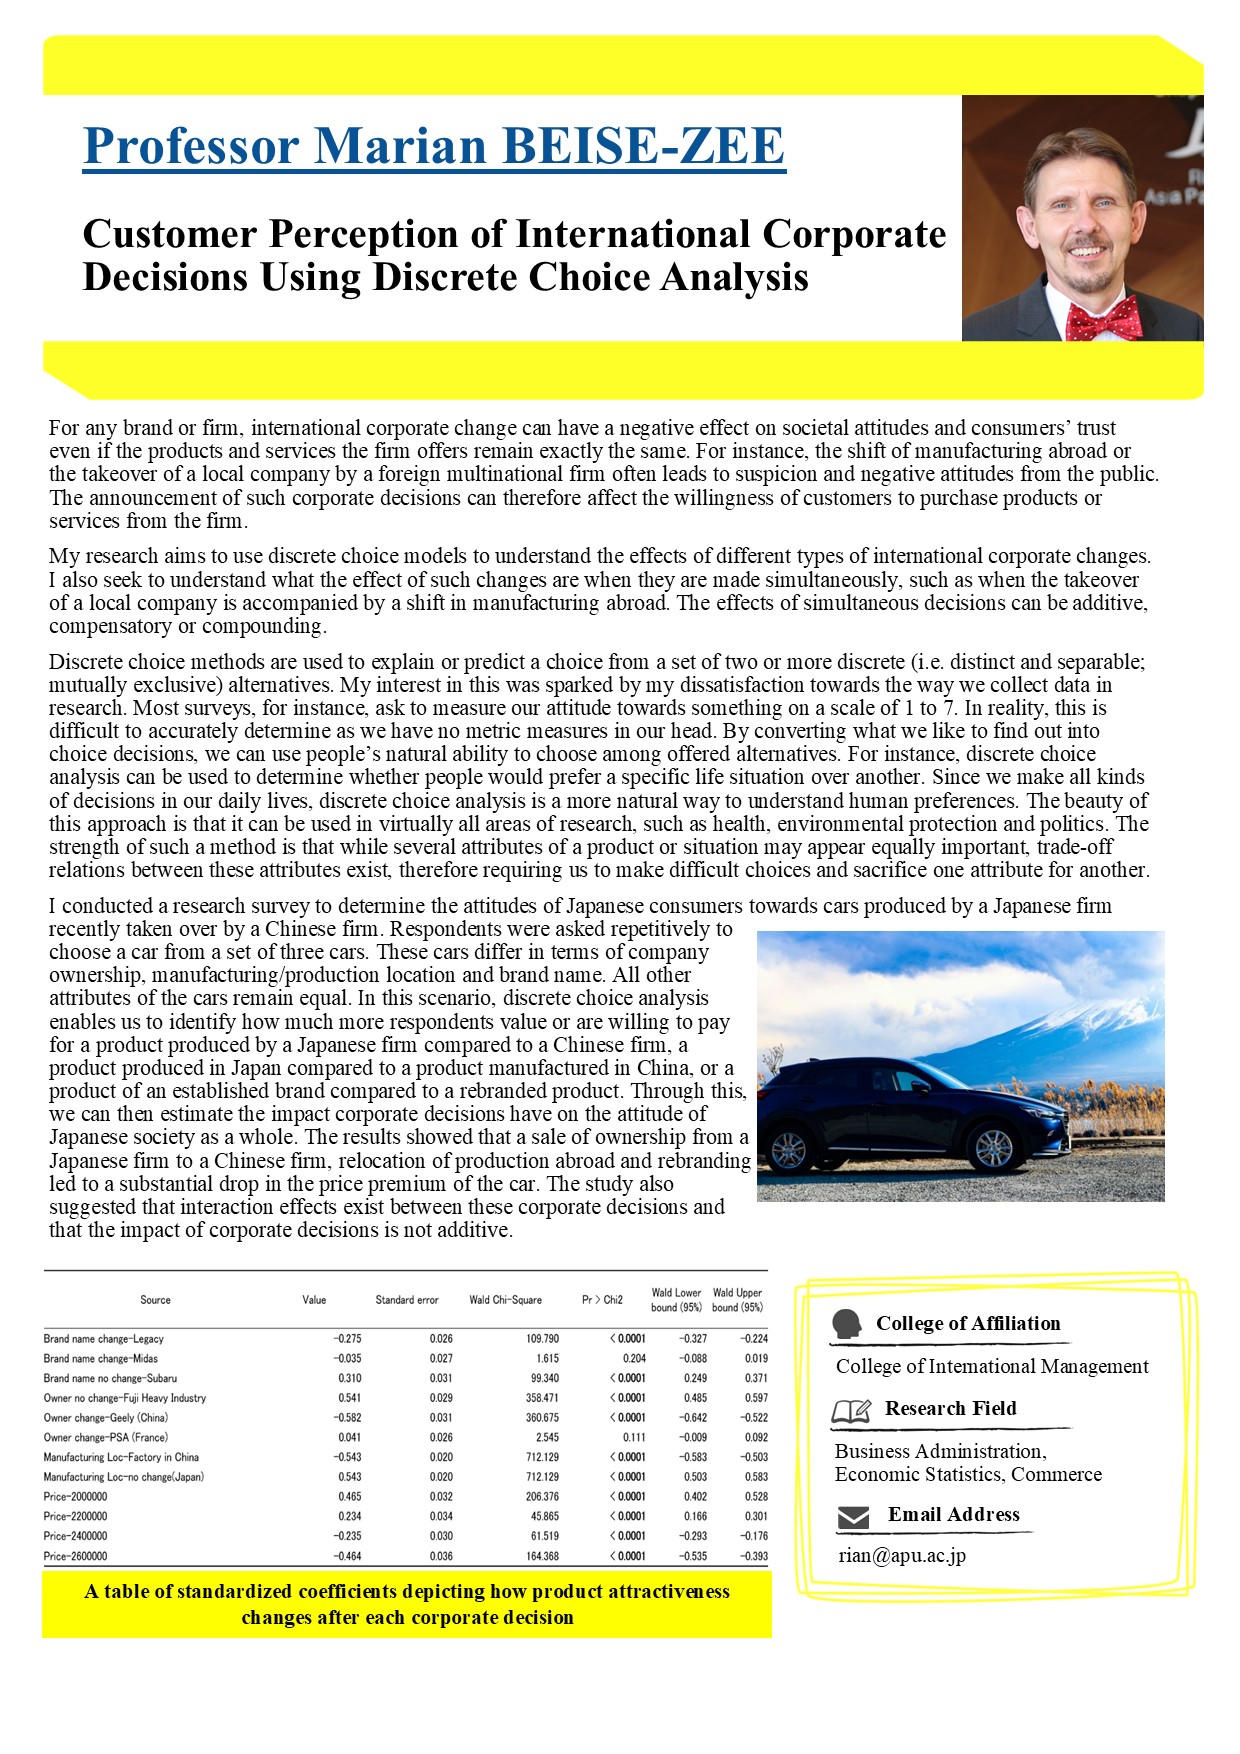 Customer Perception of International Corporate Decisions Using Discrete Choice Analysis